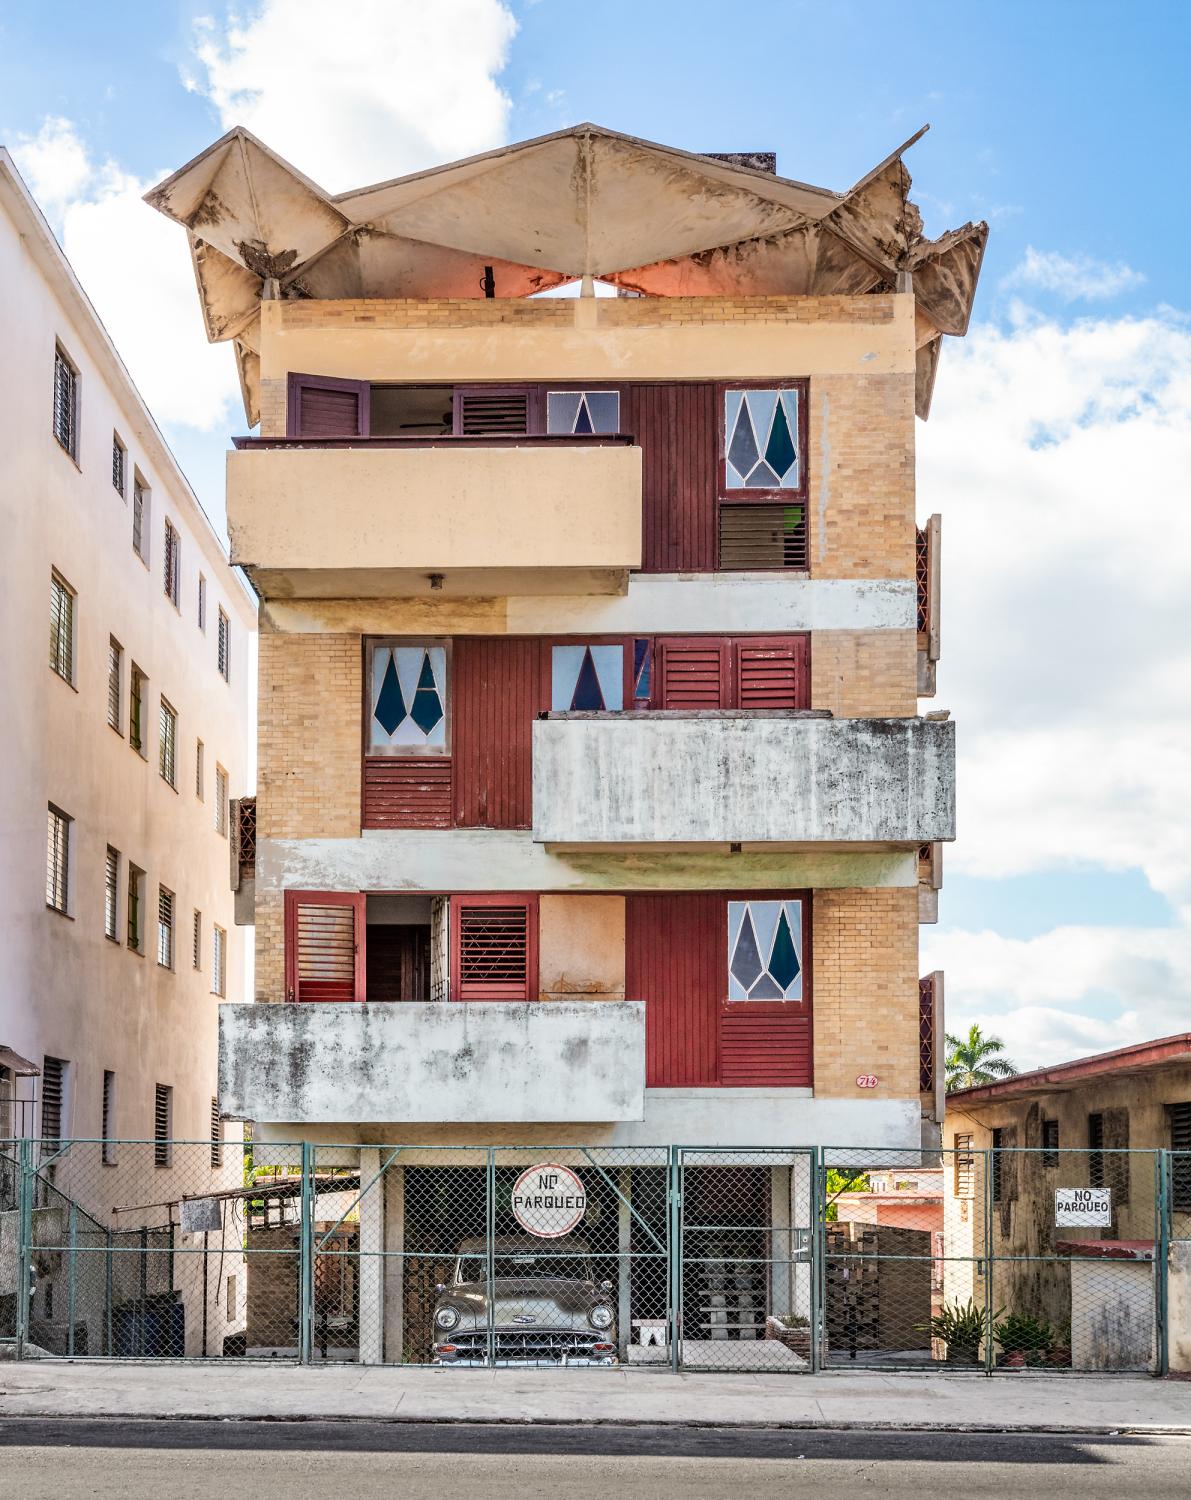 Cuban Modernist Architecture in Havana - Apartamento Reynaldo Cue / Reynaldo Cue Apartment Building